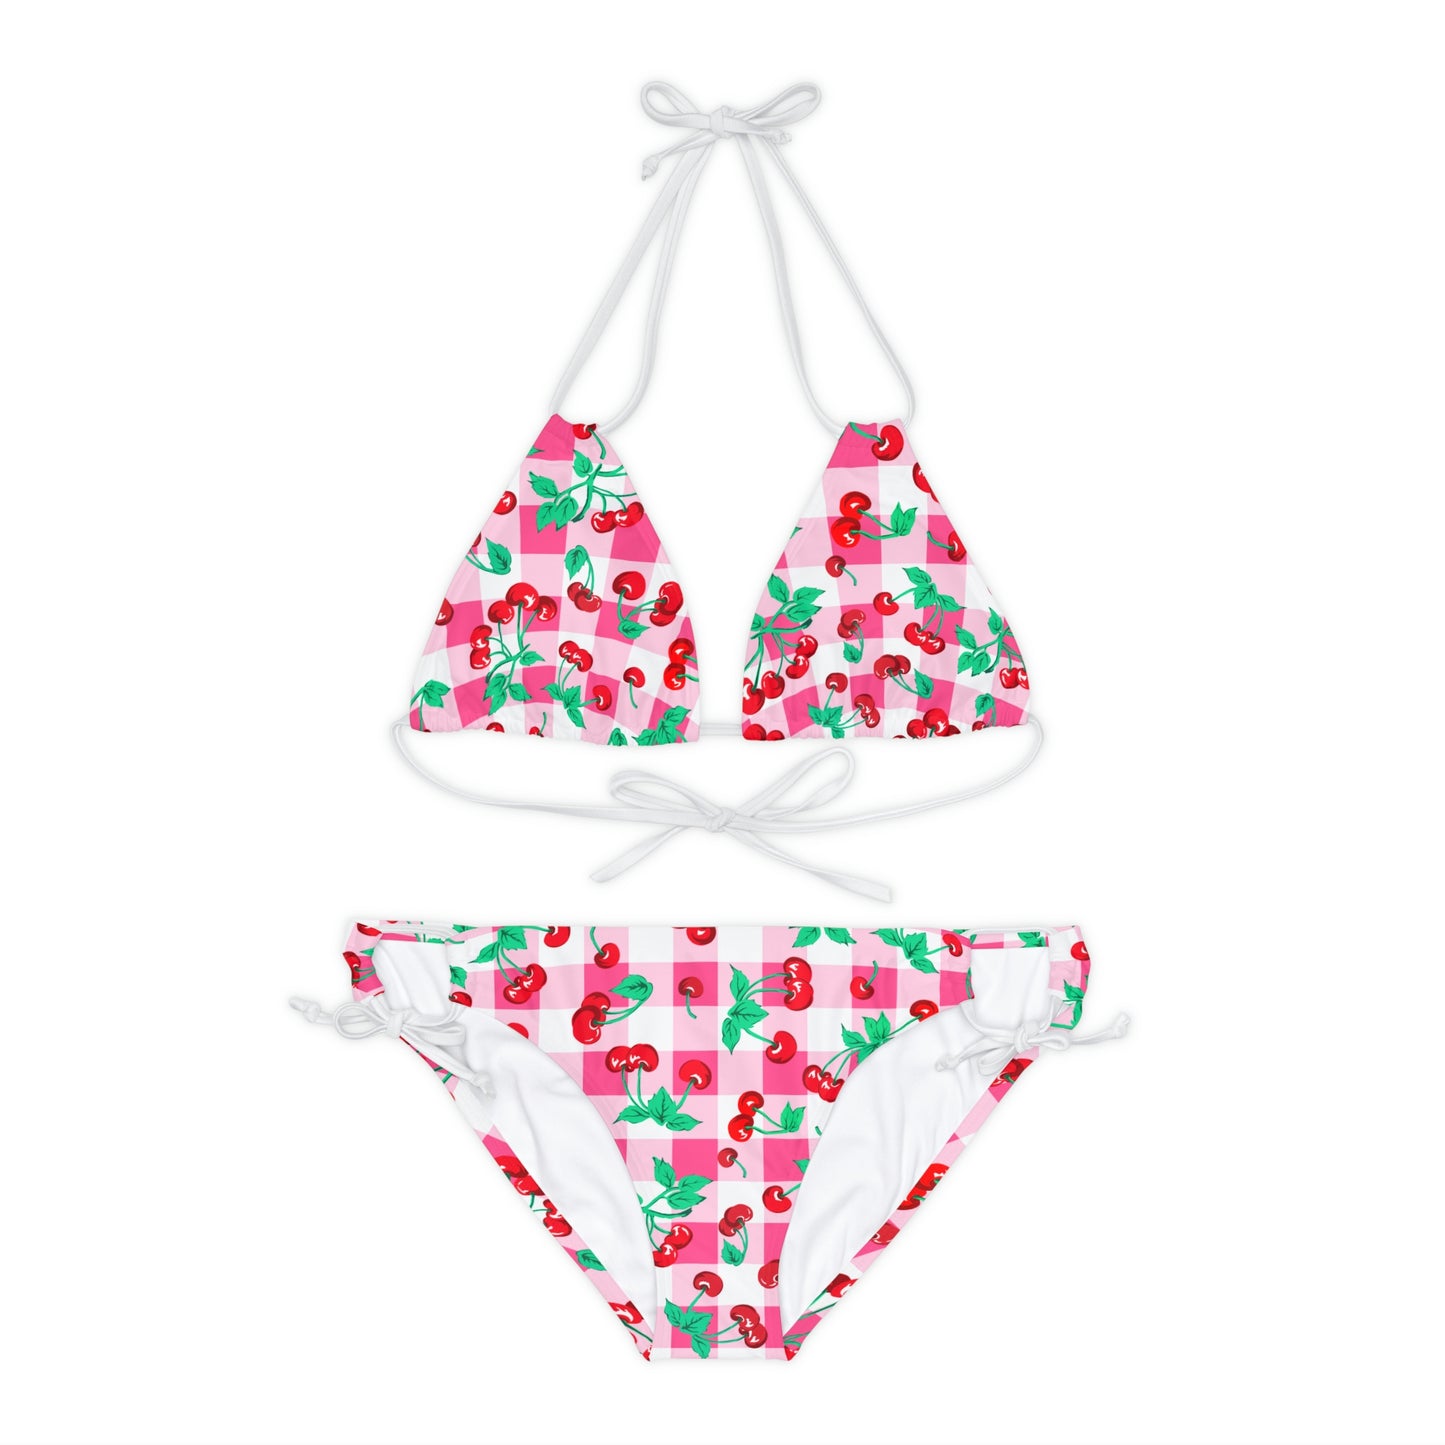 Alex Pink Vintage Gingham Cherry Girl Strappy Bikini Set | Pinup Couture Swim